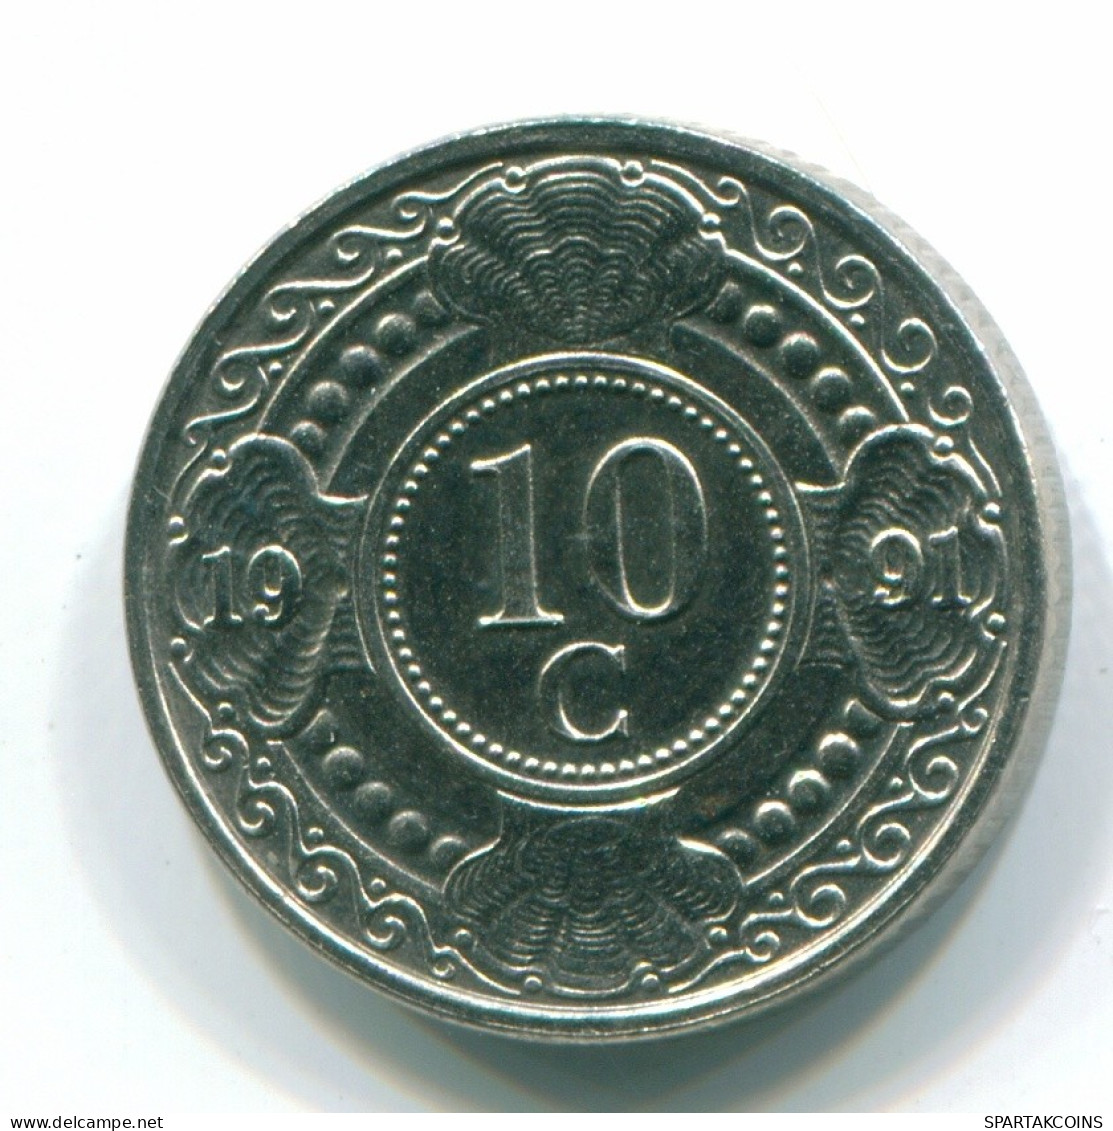 10 CENTS 1991 NETHERLANDS ANTILLES Nickel Colonial Coin #S11320.U.A - Nederlandse Antillen